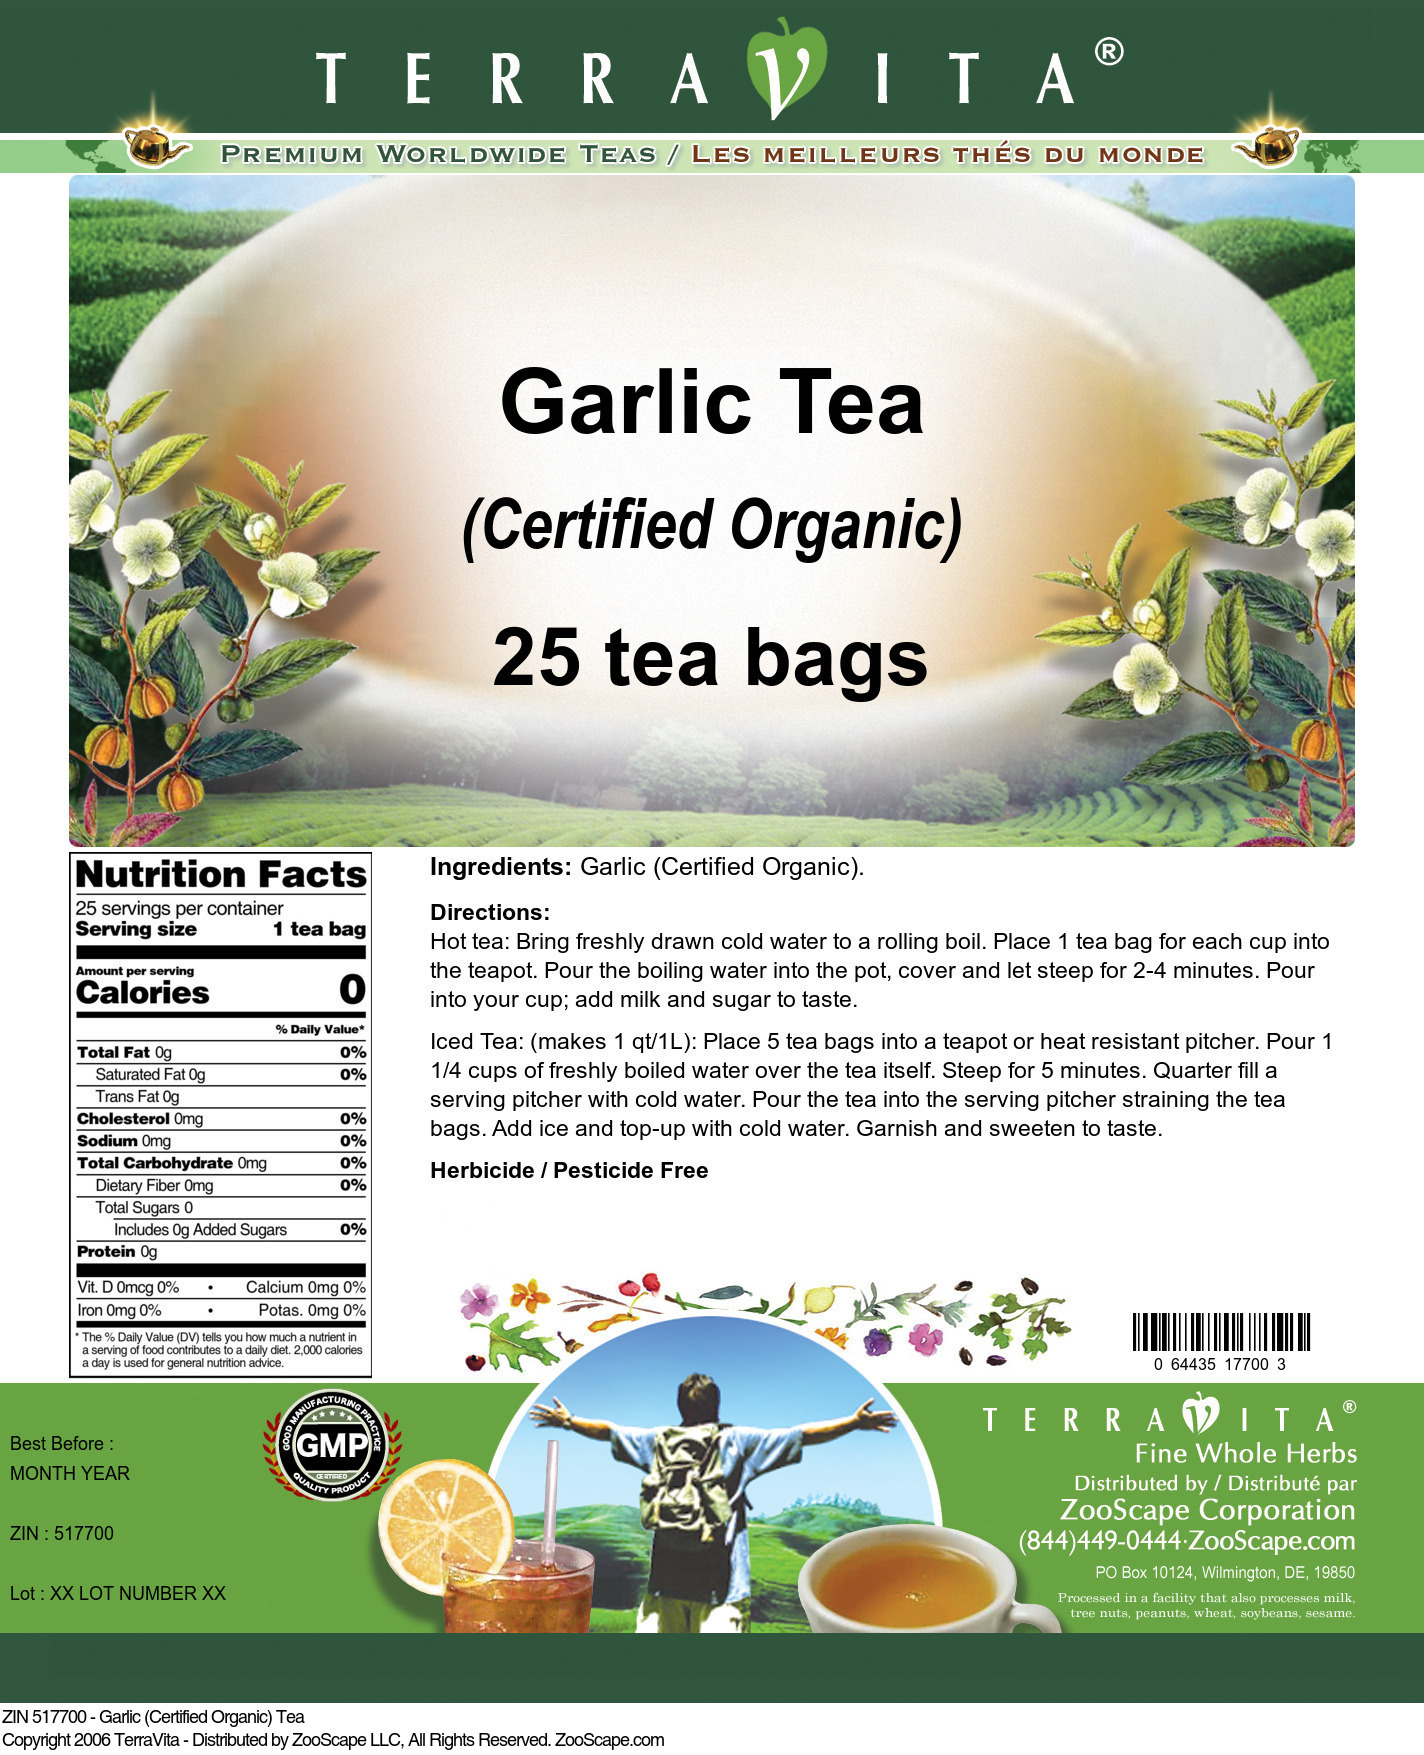 Garlic (Certified Organic) Tea - Label